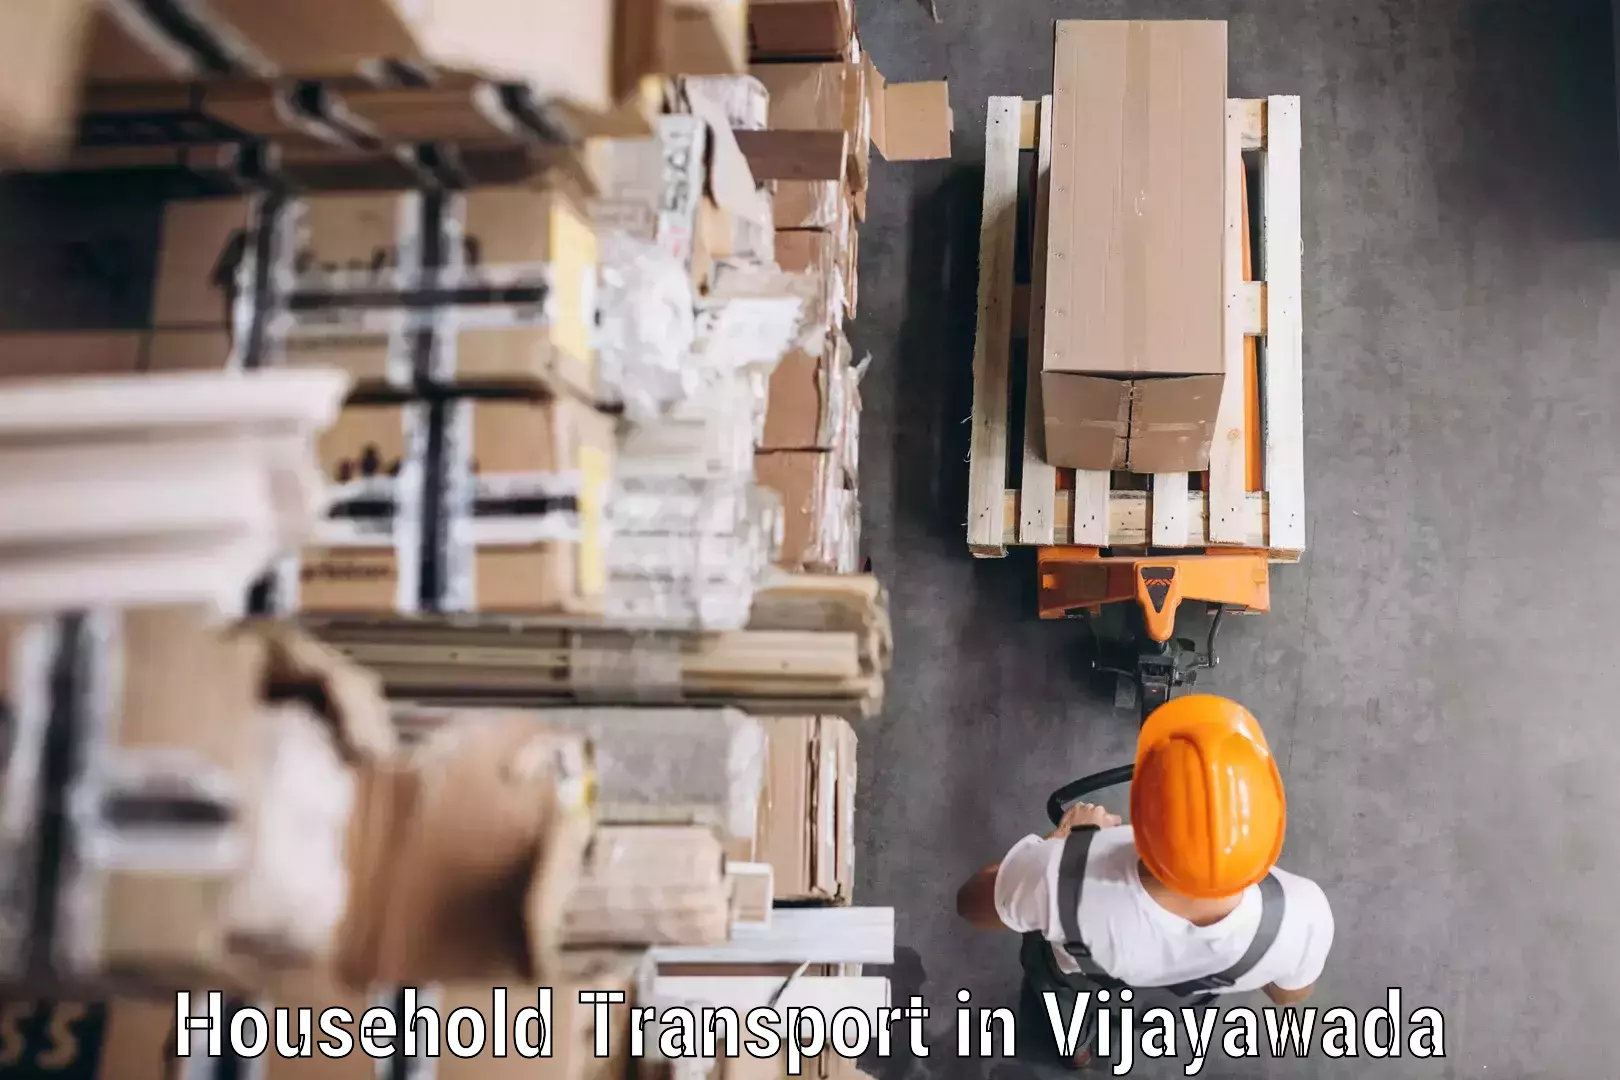 Household goods transport in Vijayawada